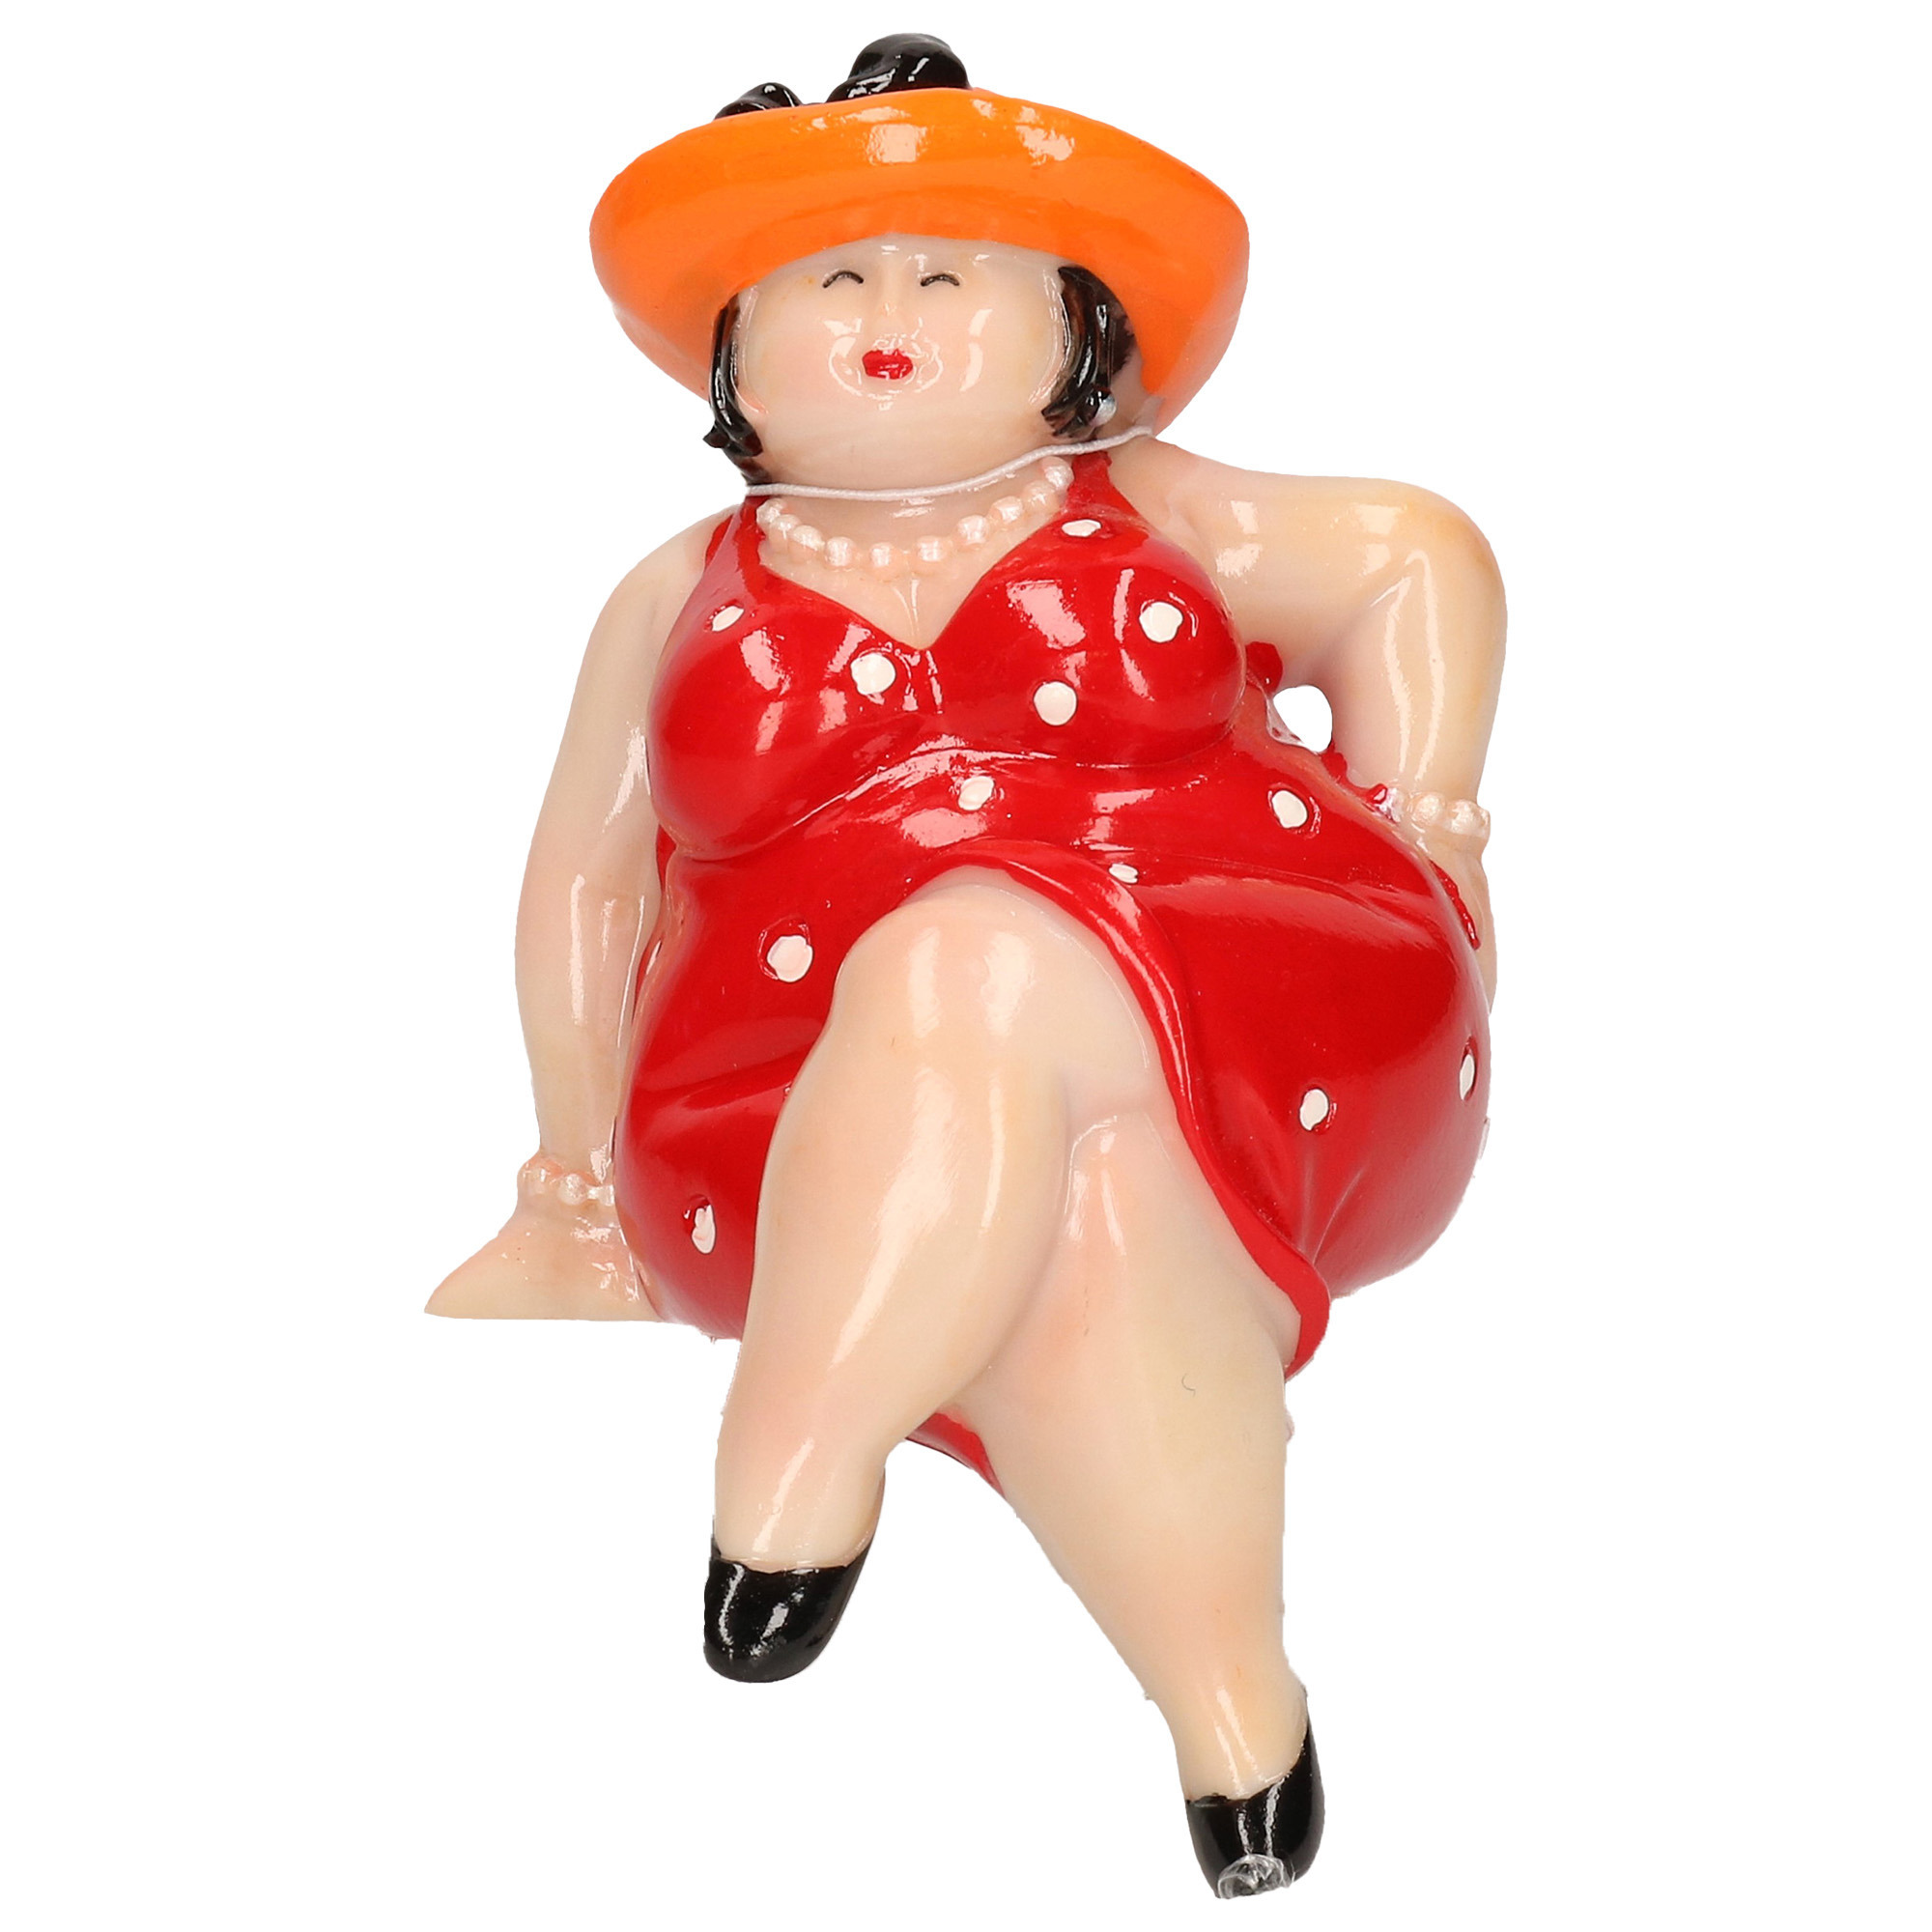 Woonkamer decoratie beeldje zittend dikke dame jurk rood 15 cm